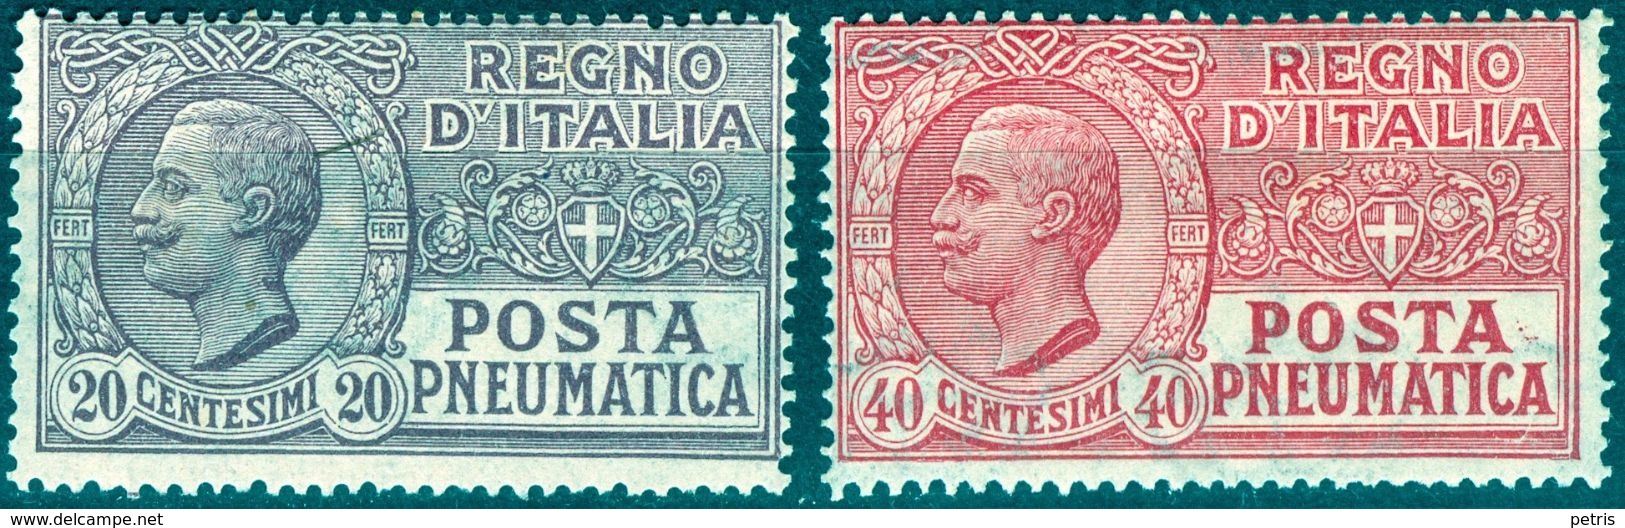 Italy 1925 Posta Pneumatica 20+40 C. MNH** - Lot. REPN8-PN9 - Posta Pneumatica